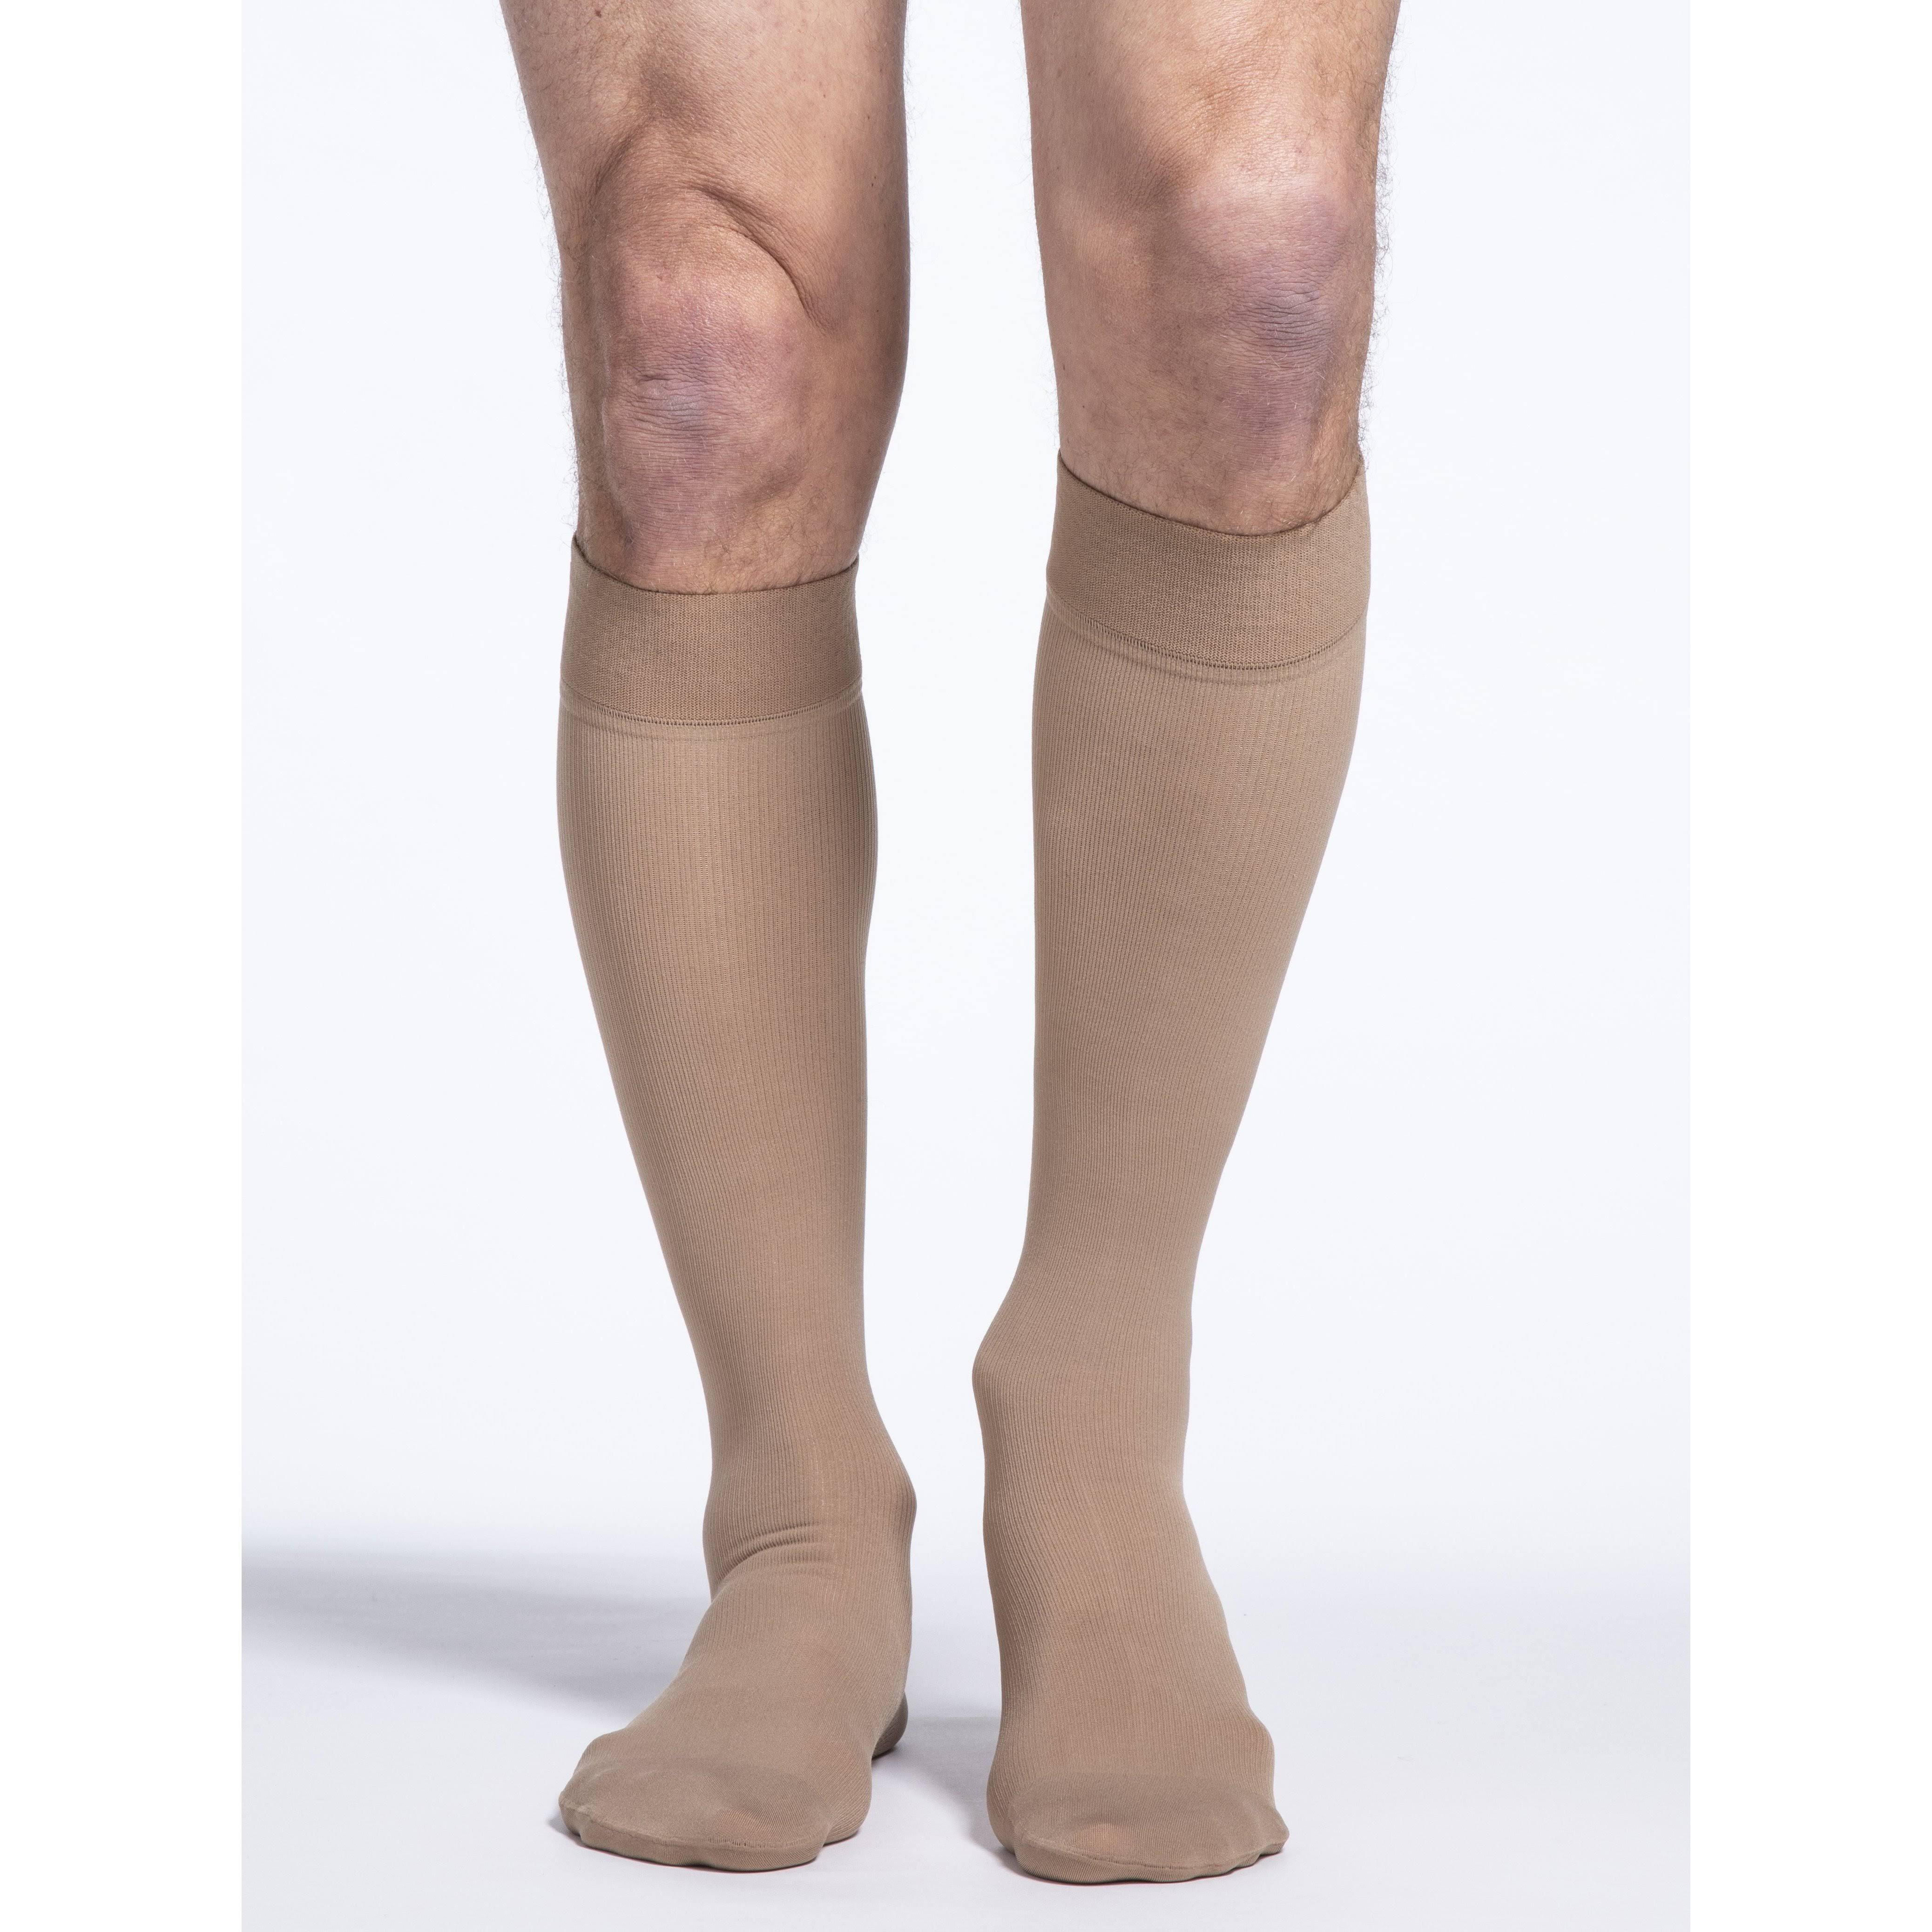 SIGVARIS Midtown Microfiber Knee High Compression Men's Socks - Black, 20-30mmhg, Medium-Large